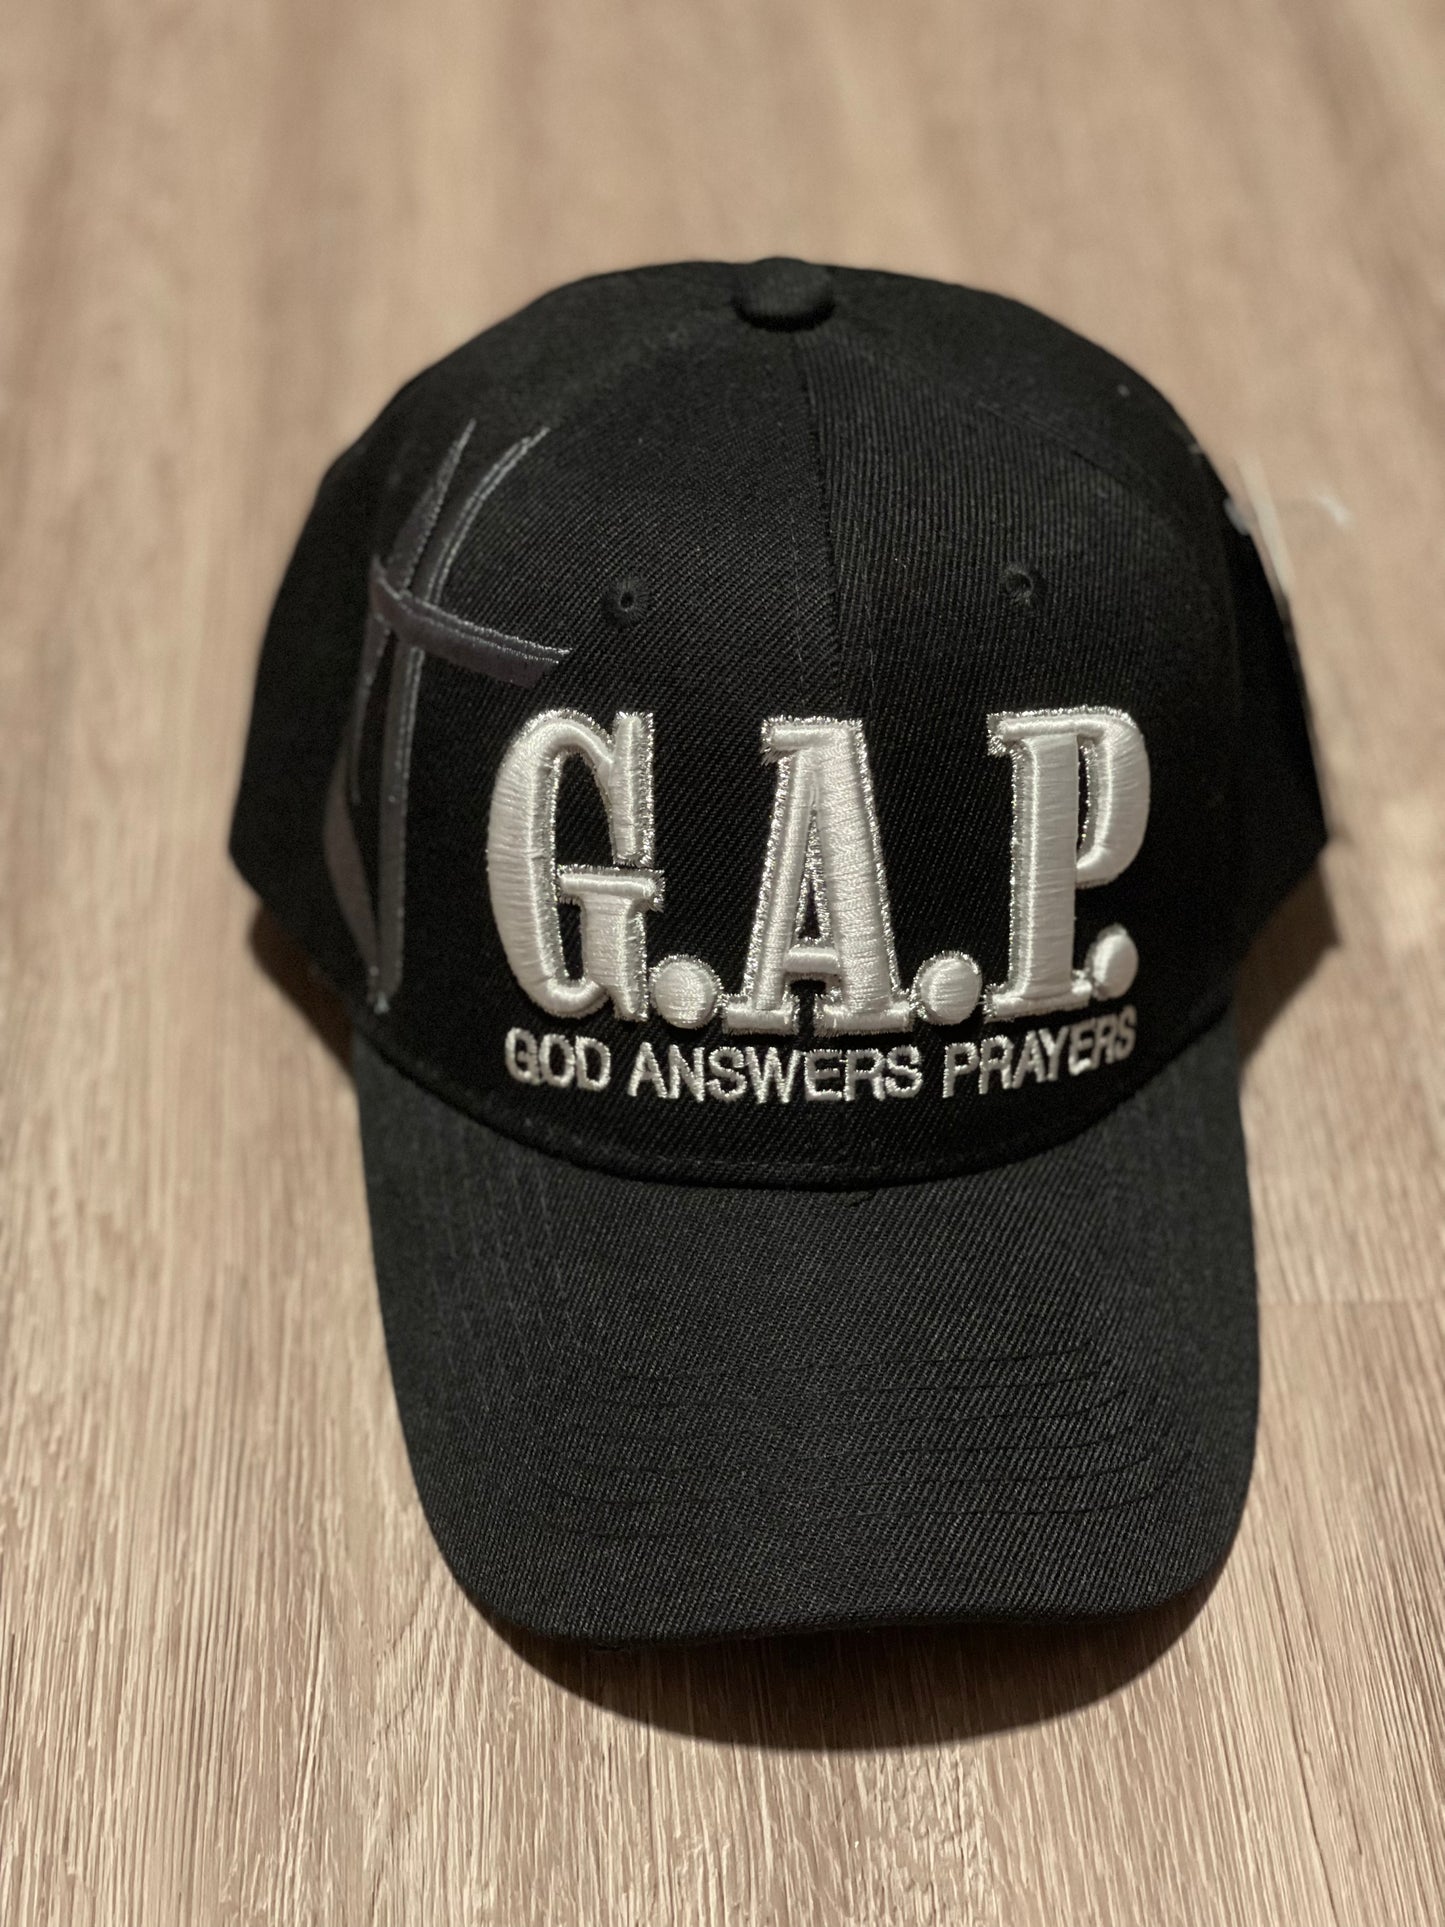 G.A.P. (God Answers Prayers) Baseball Cap - Black